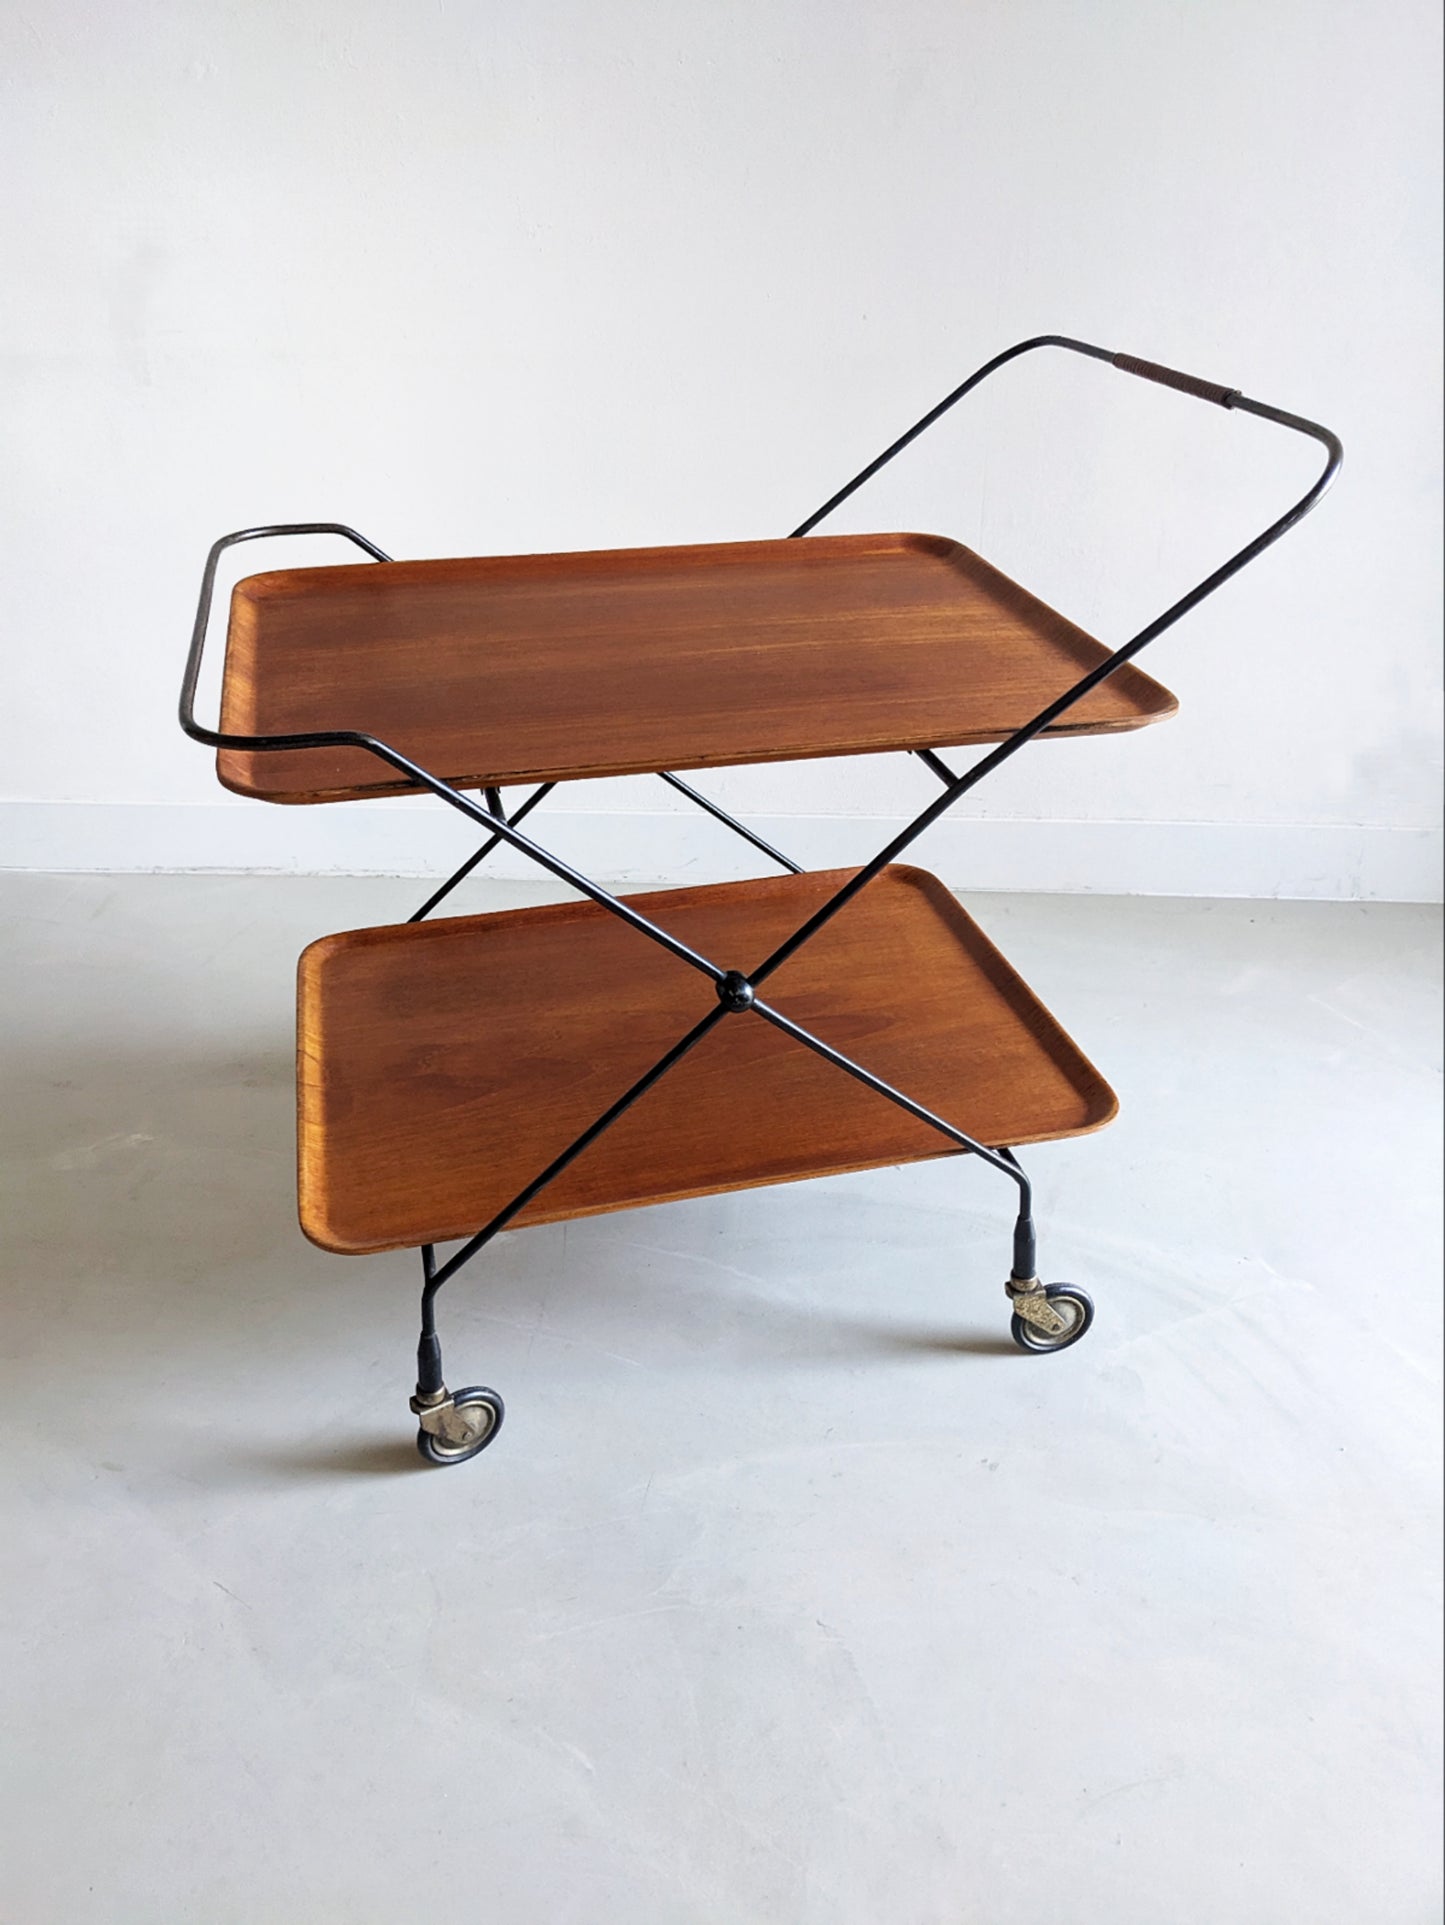 Foldable Bar Cart by Paul Nagel for Jie Gantofa 1960's